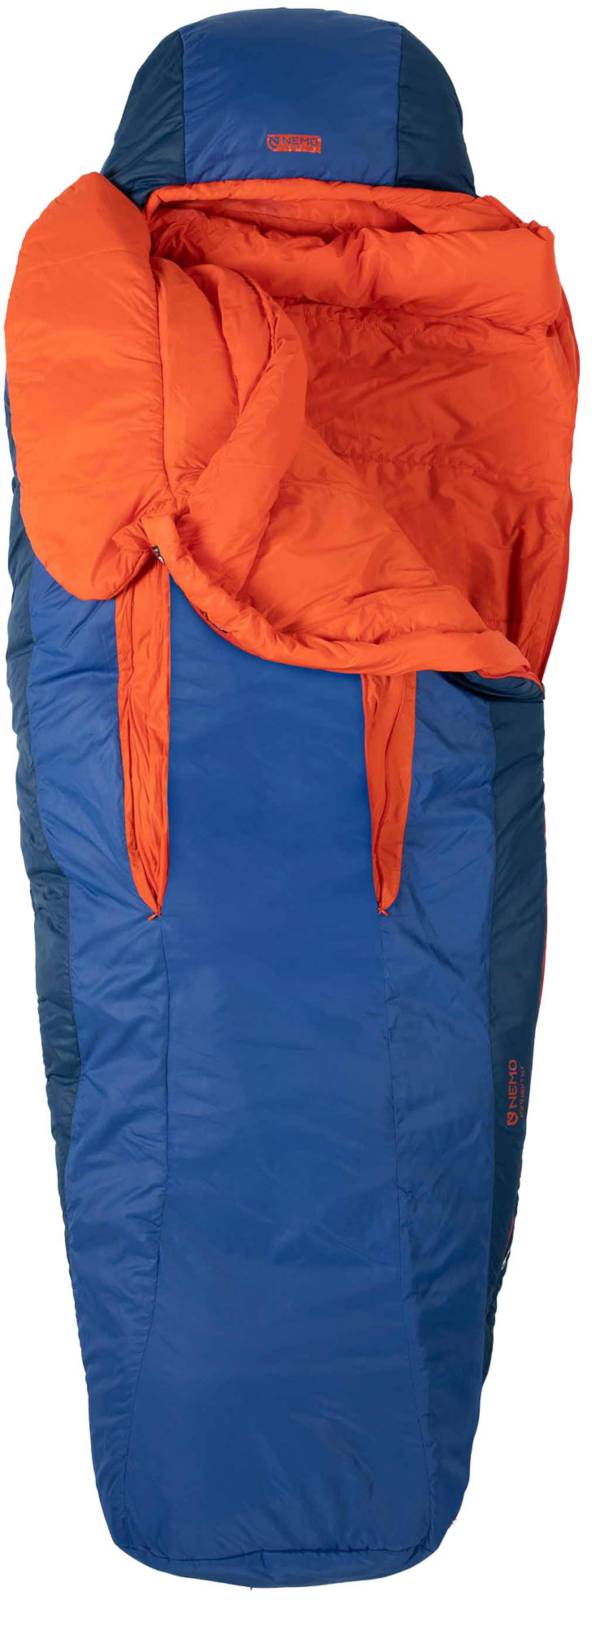 NEMO Men's Forte 35° Sleeping Bag product image